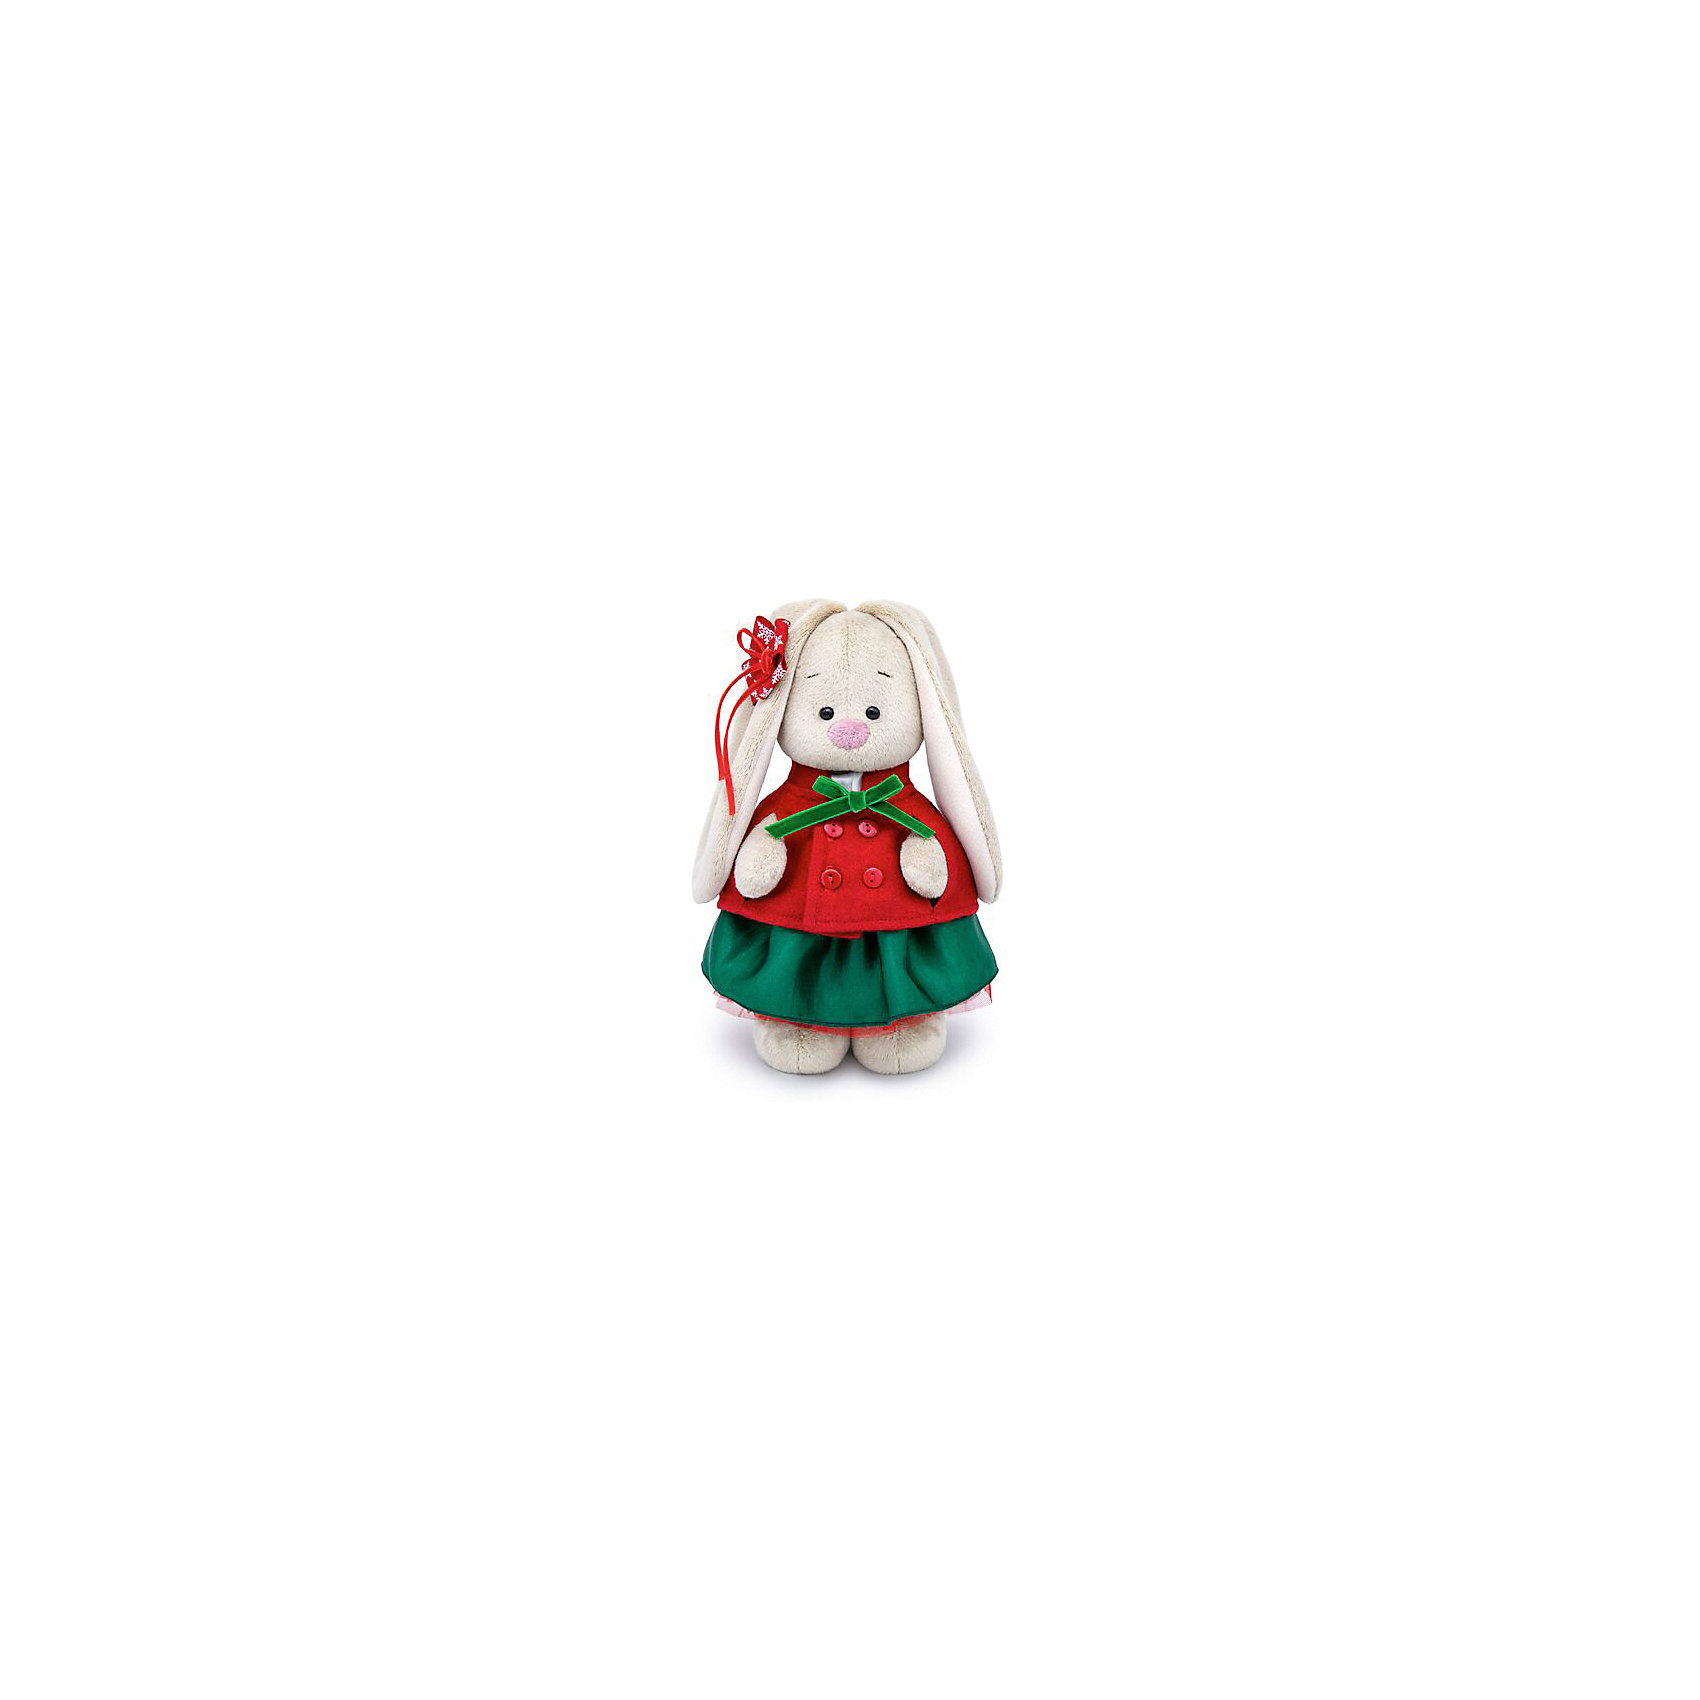 фото Мягкая игрушка Budi Basa Зайка Ми в красном жакете и зеленой юбке, 25 см